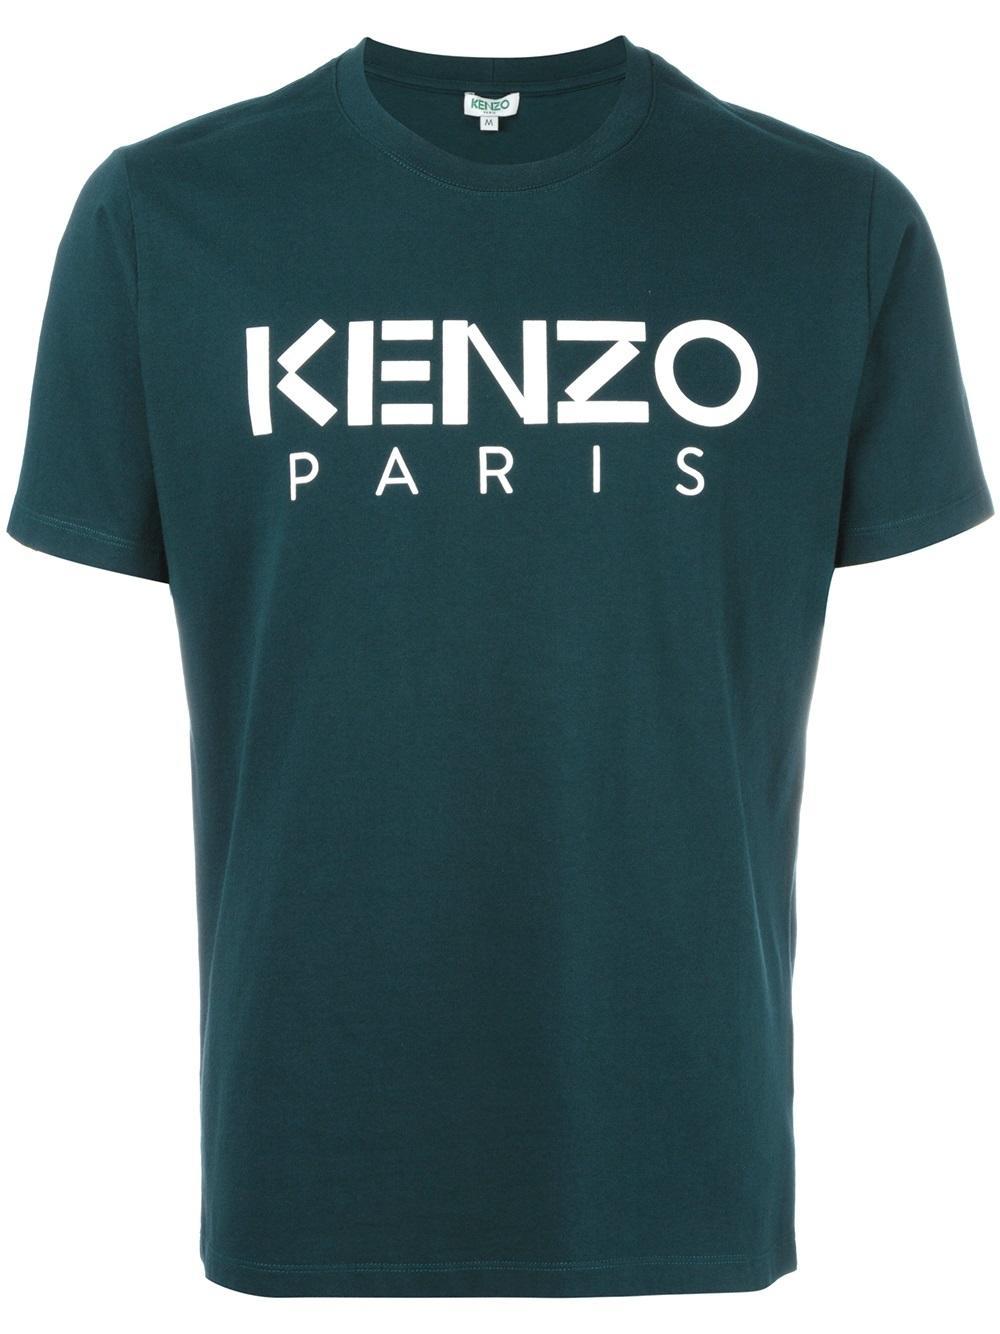 Kenzo Paris T-shirt in Green for Men | Lyst